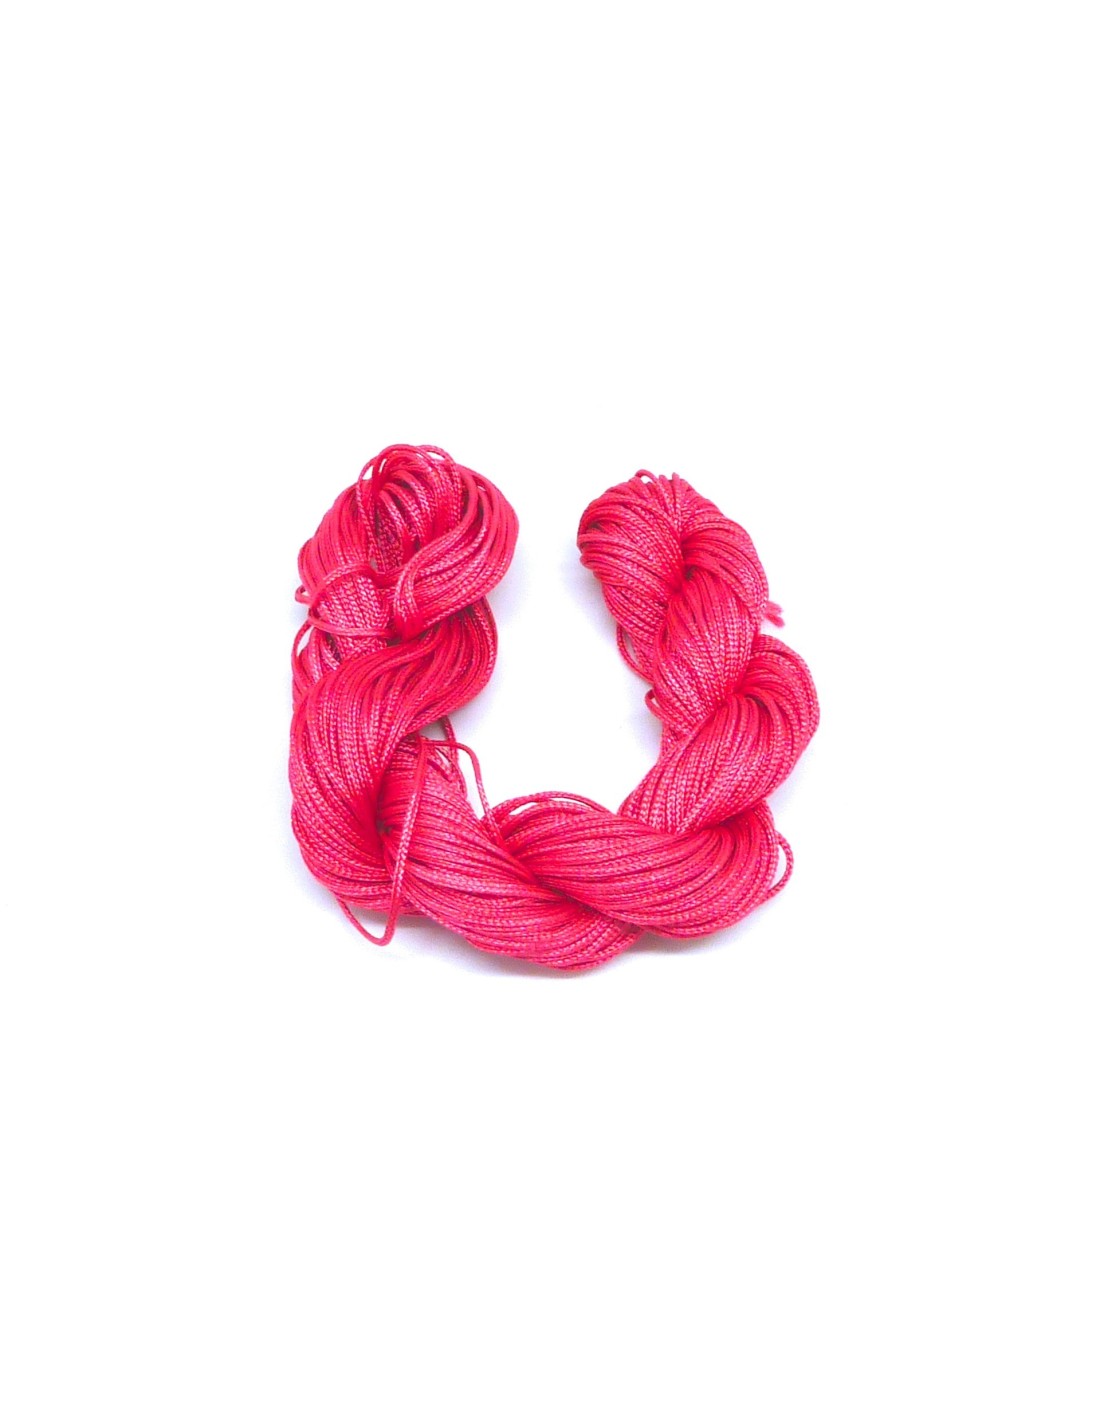 fil nylon tressé rose fuchsia vif 0,8mm pour tressage bracelet wrap